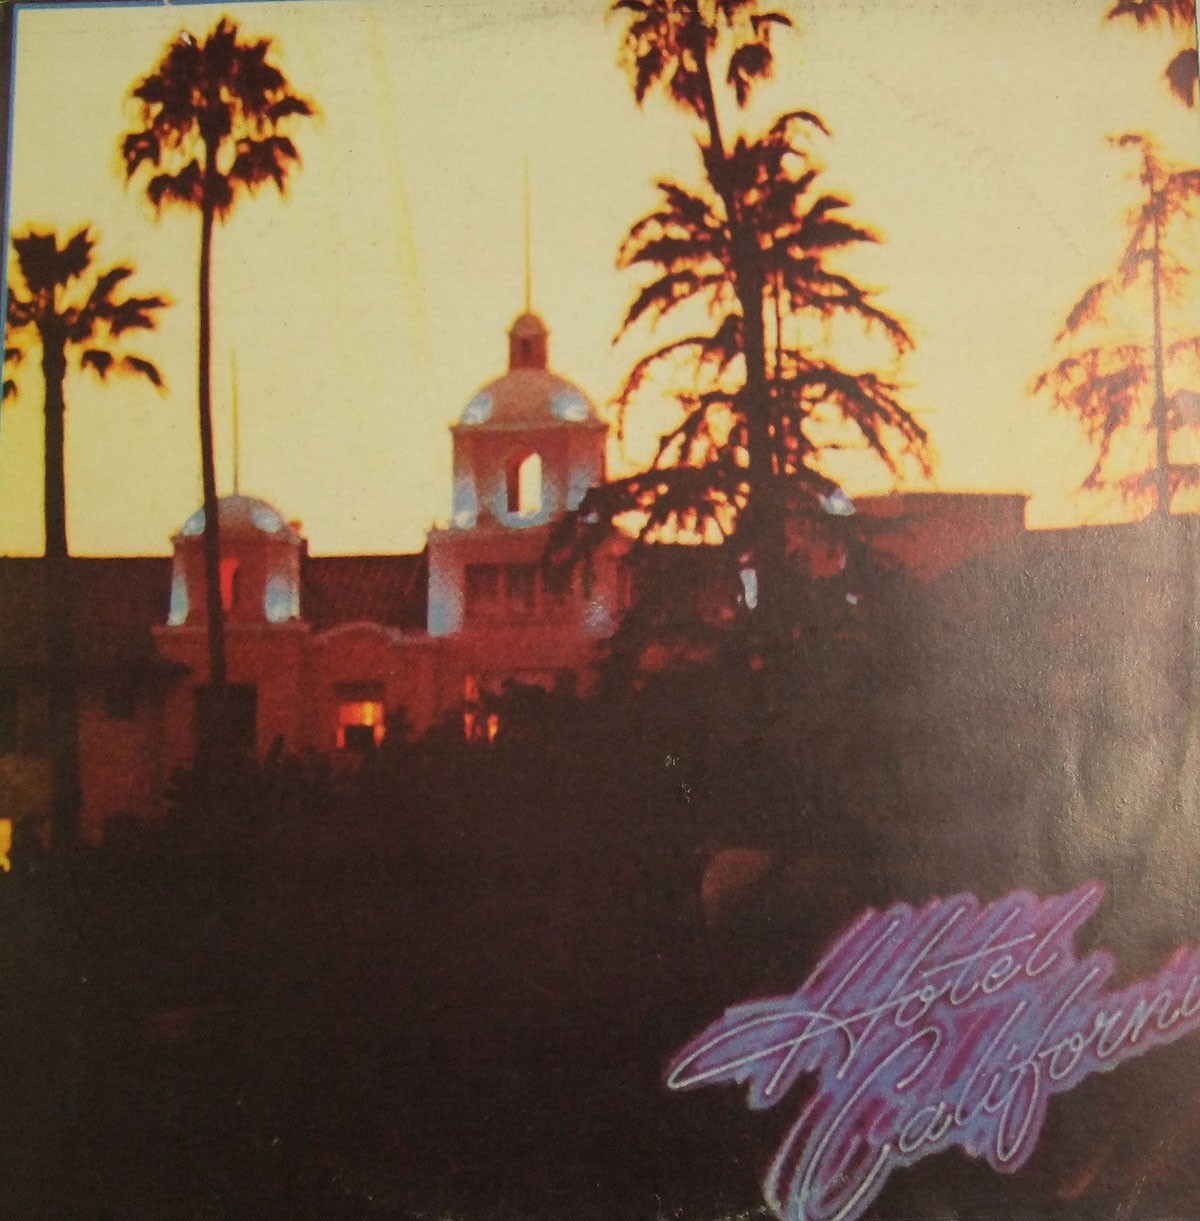 Cover des Albums "Hotel California" der Eagles